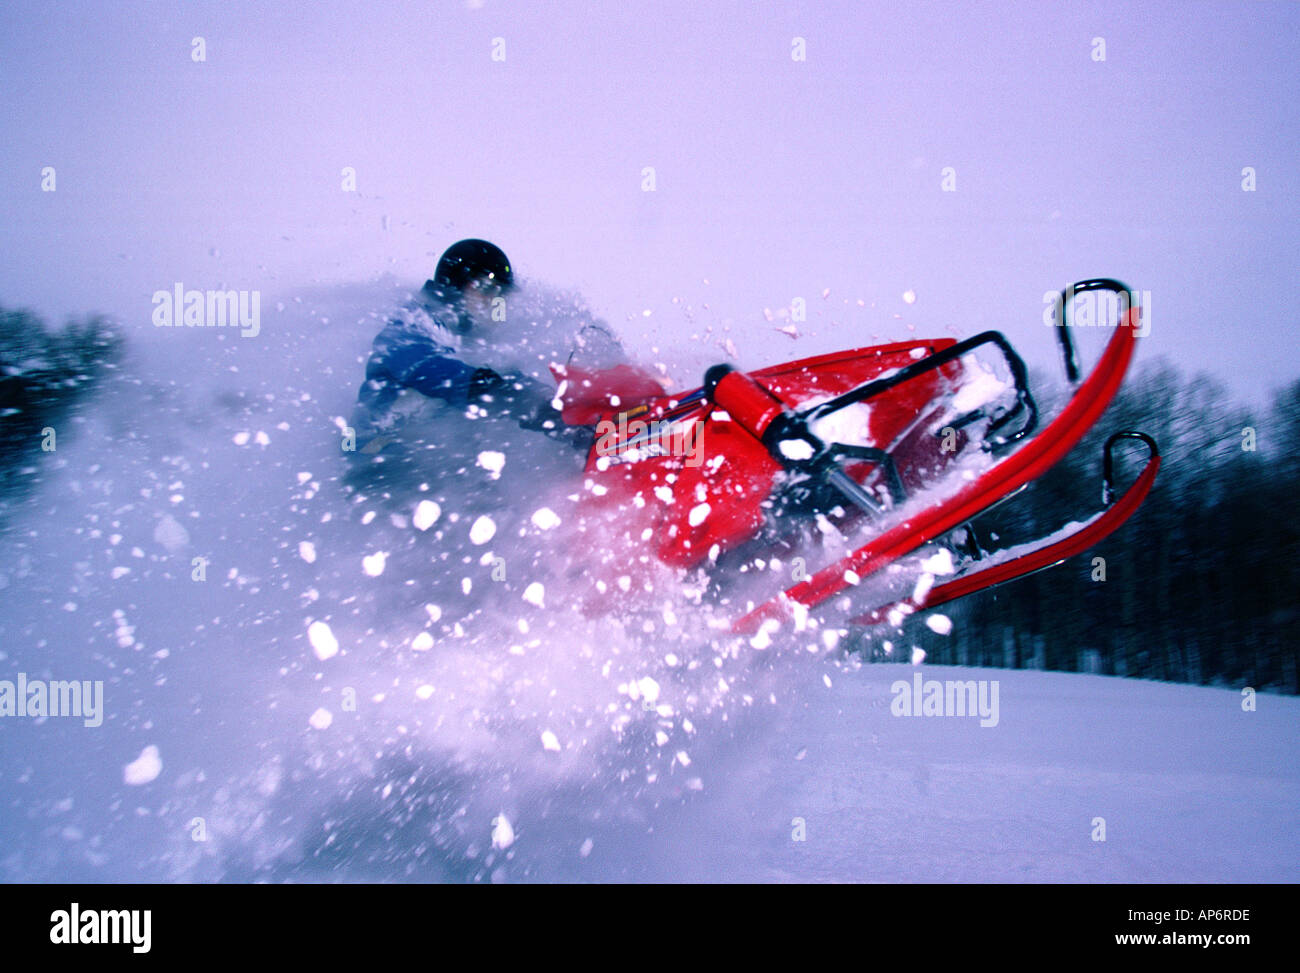 Snowmobile launching through powder snow Stock Photo